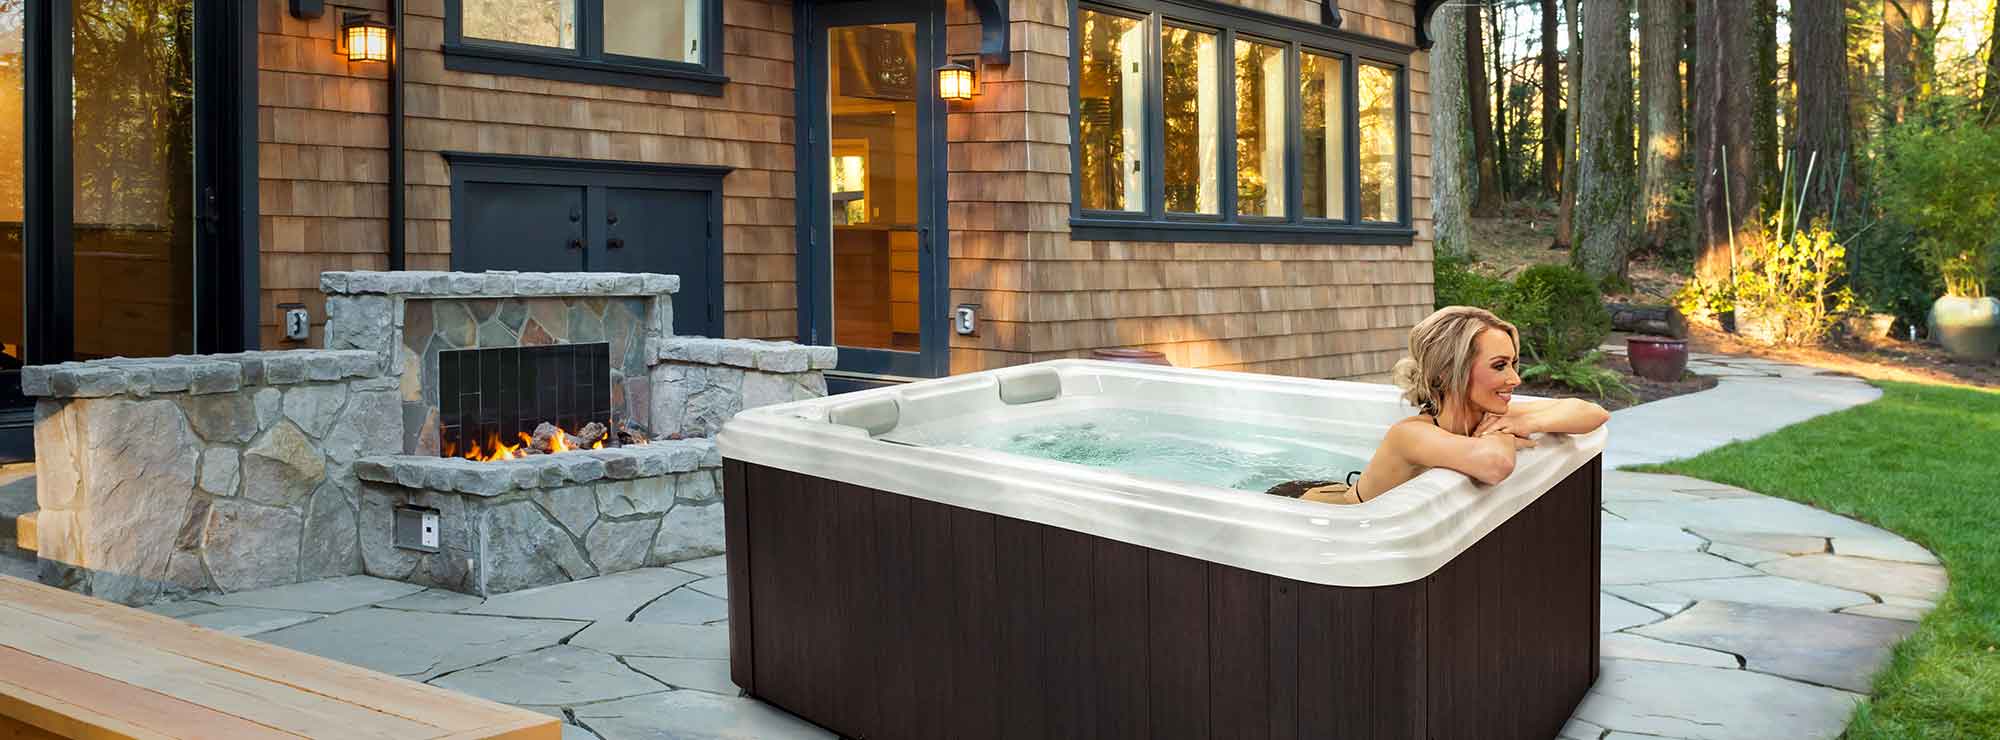 Garden Azalea Spa & Hot Tub Lifestyle